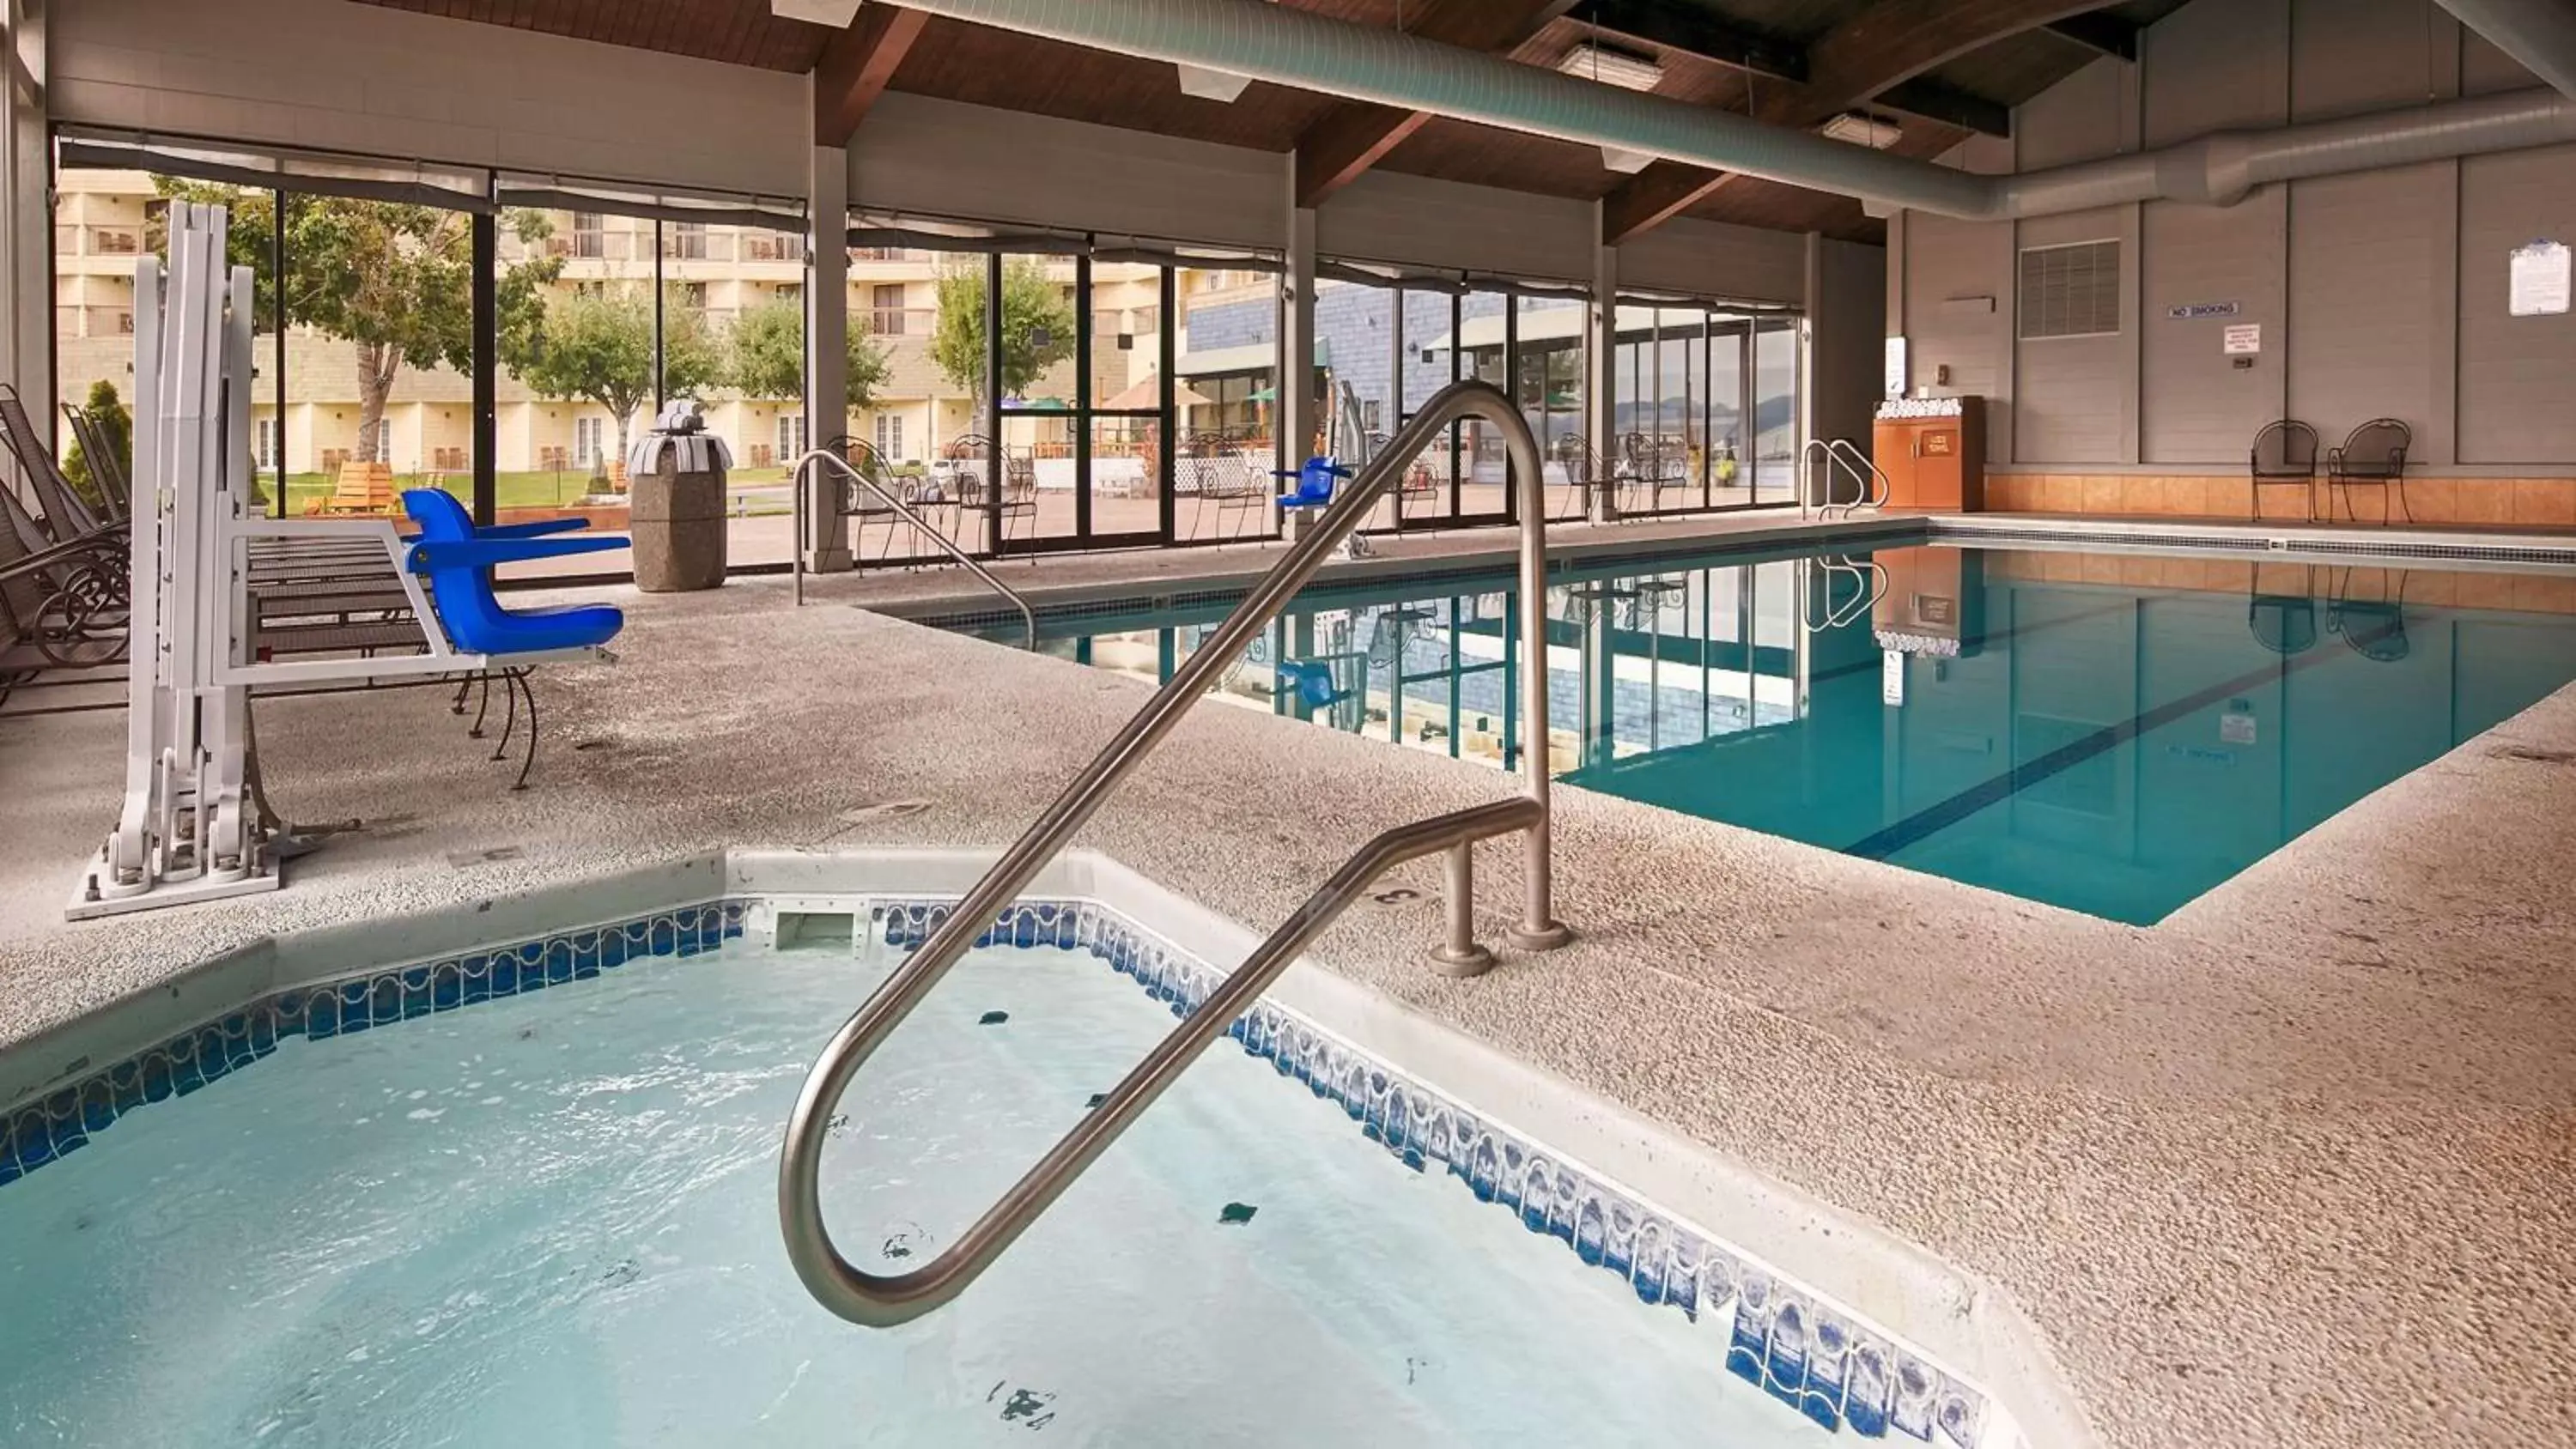 On site, Swimming Pool in Best Western Plus Silverdale Beach Hotel